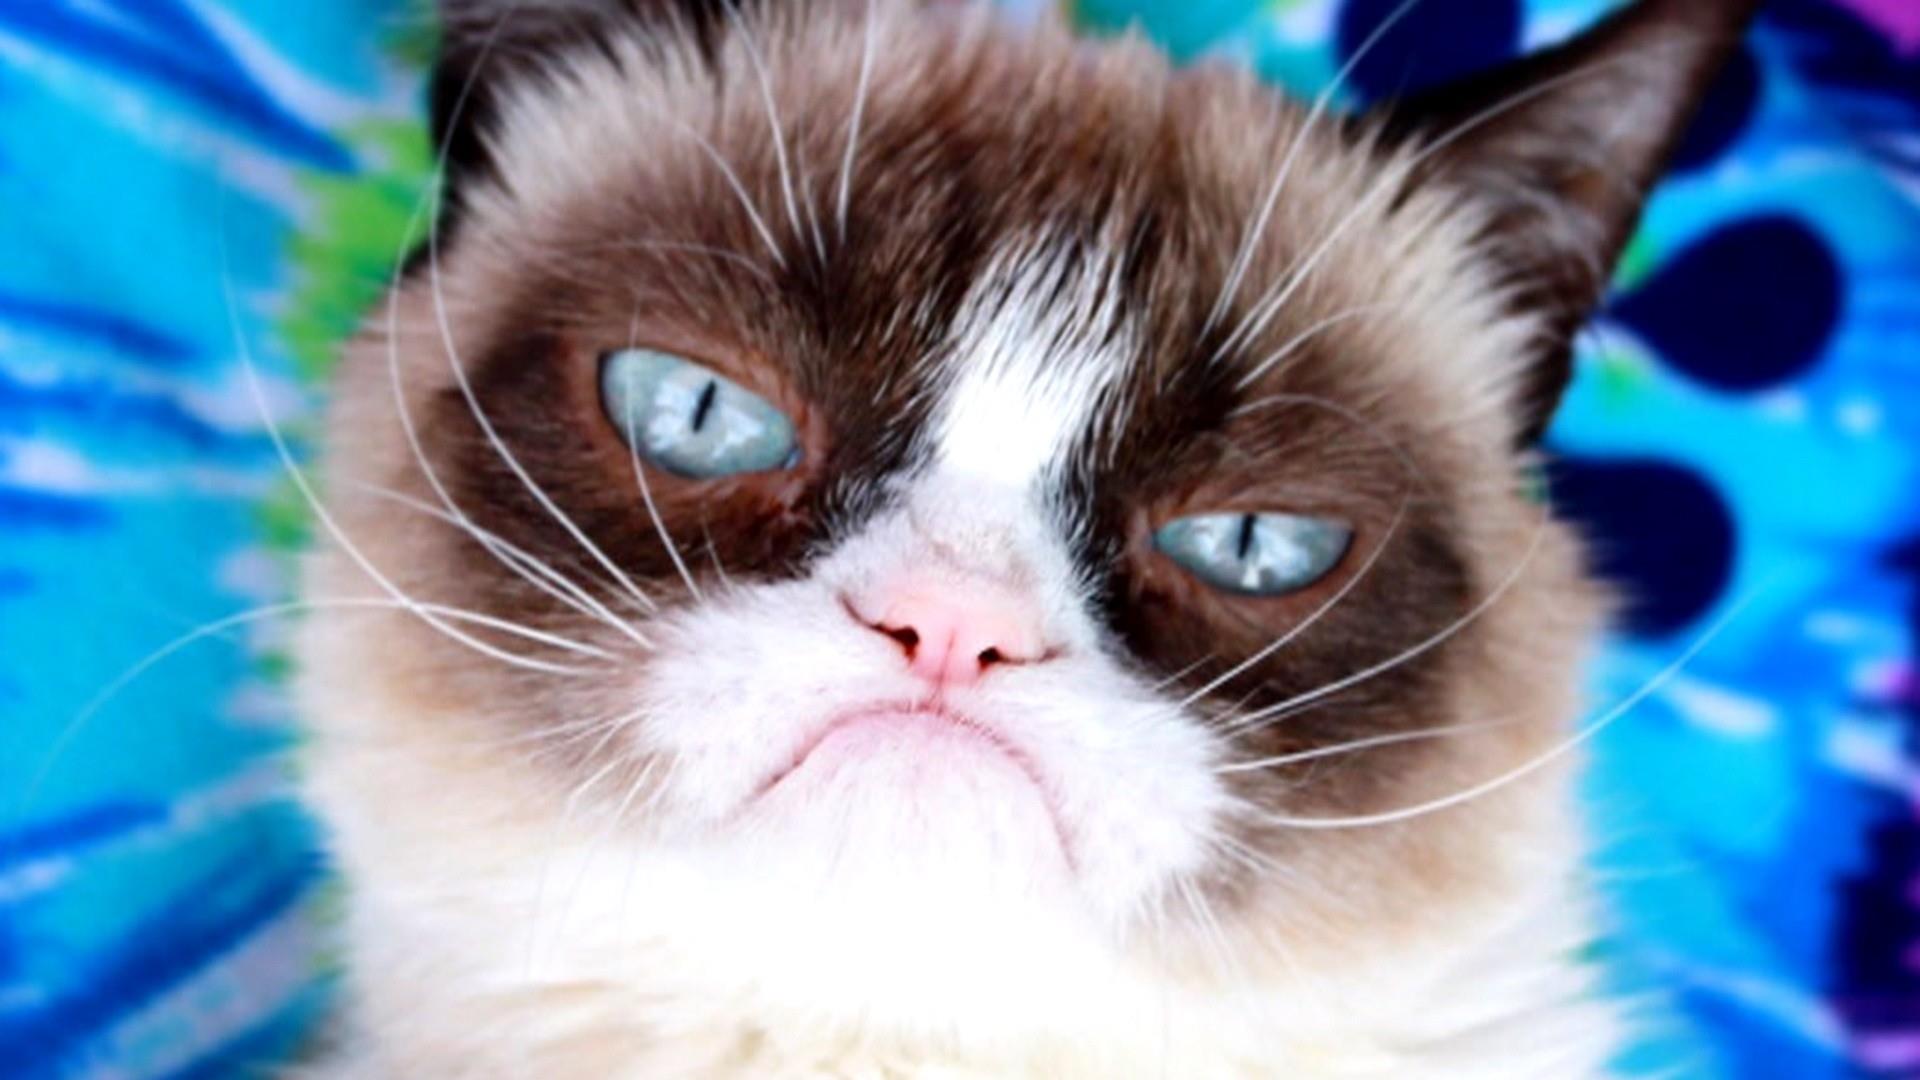 grumpy cat face